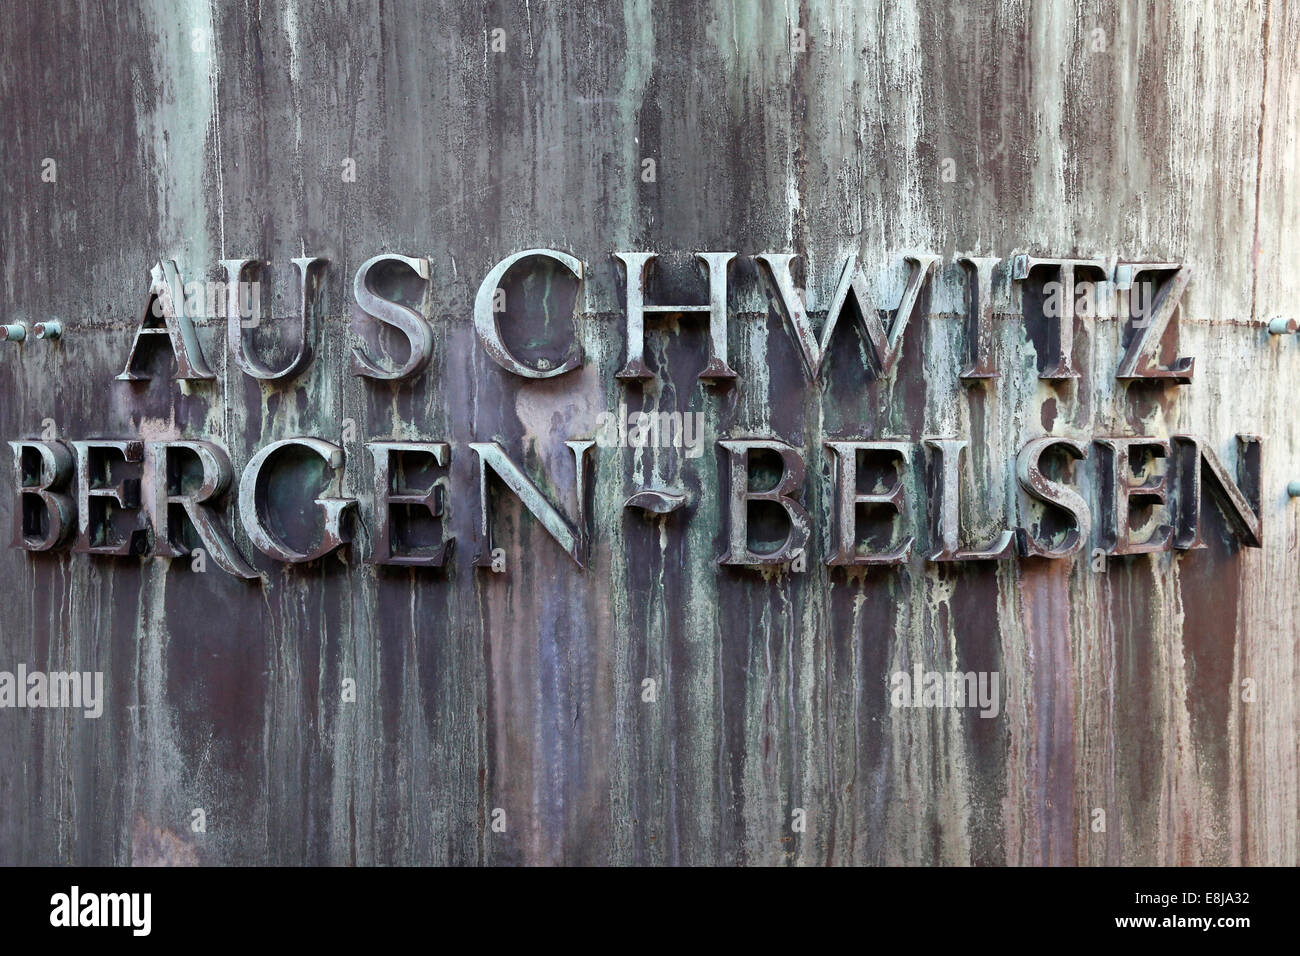 The Shoah Memorial. Auschwitz and Bergen-Belsen. Stock Photo